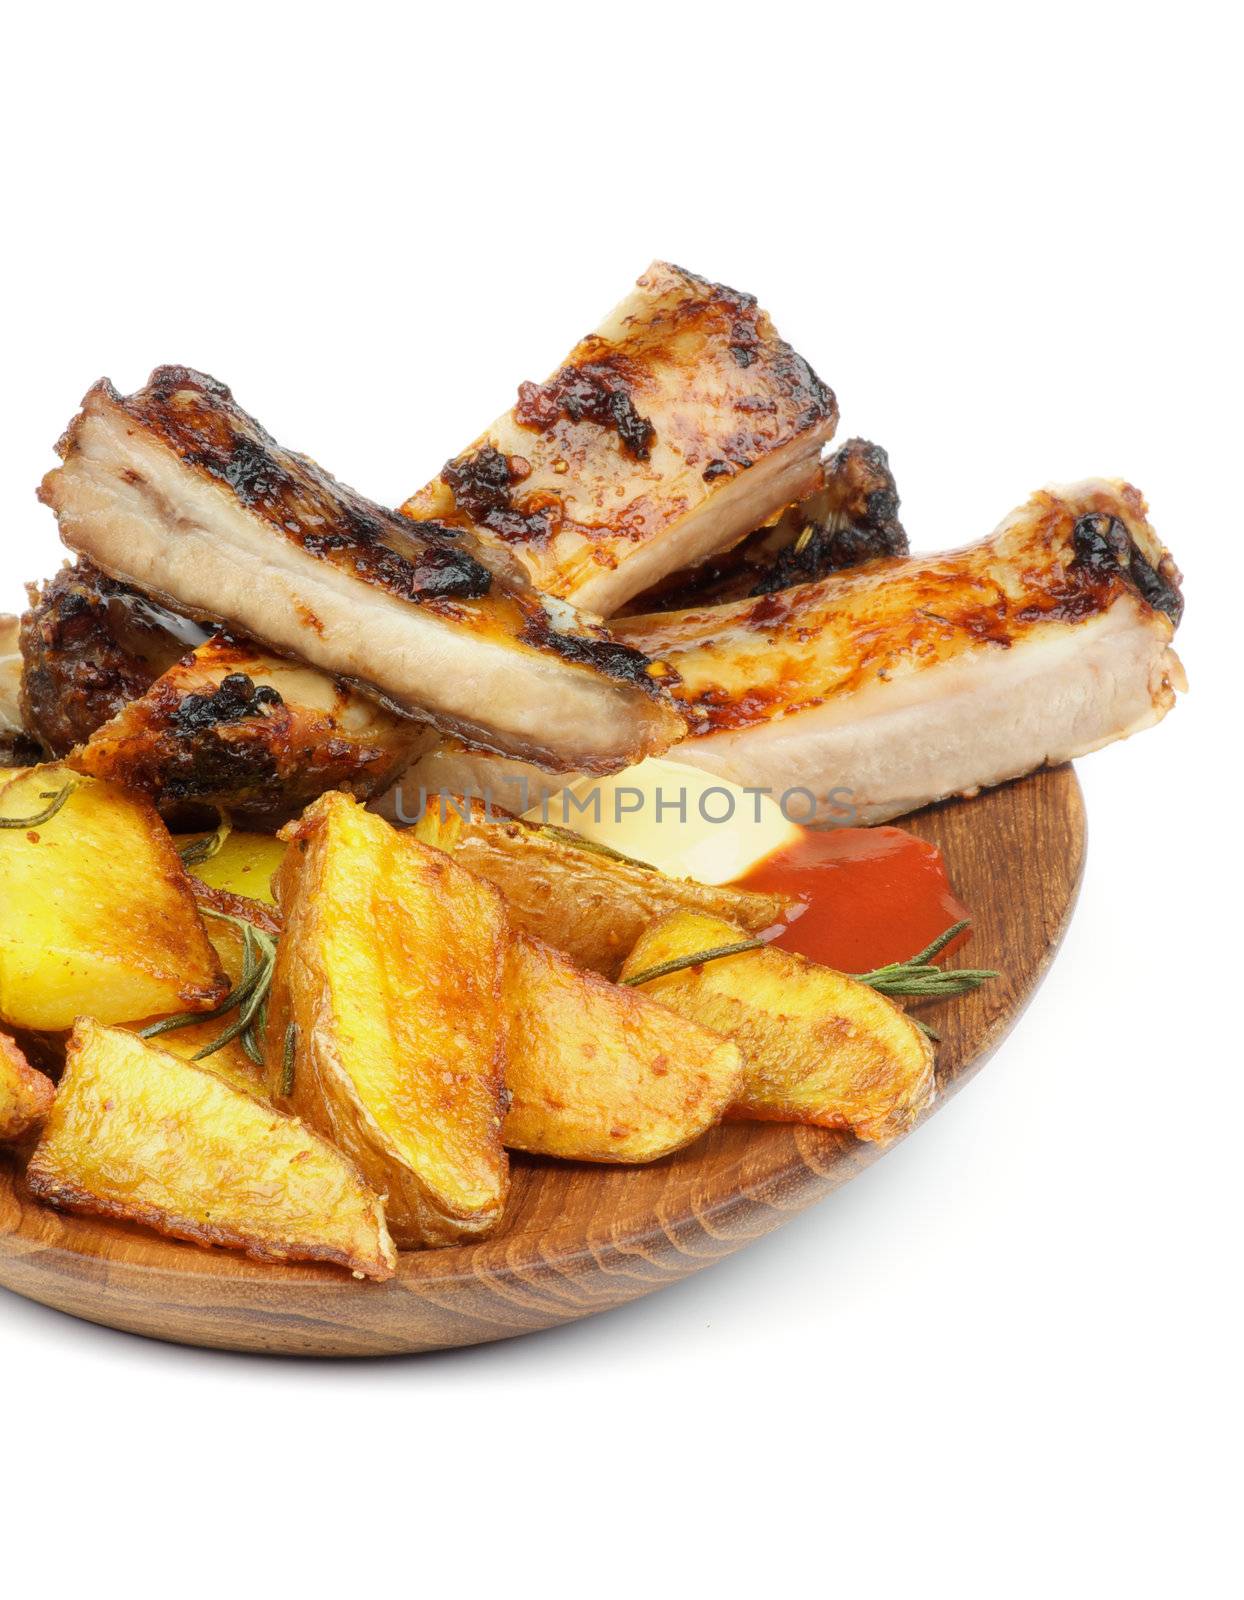 Barbecue Pork Ribs and Roasted Potato by zhekos